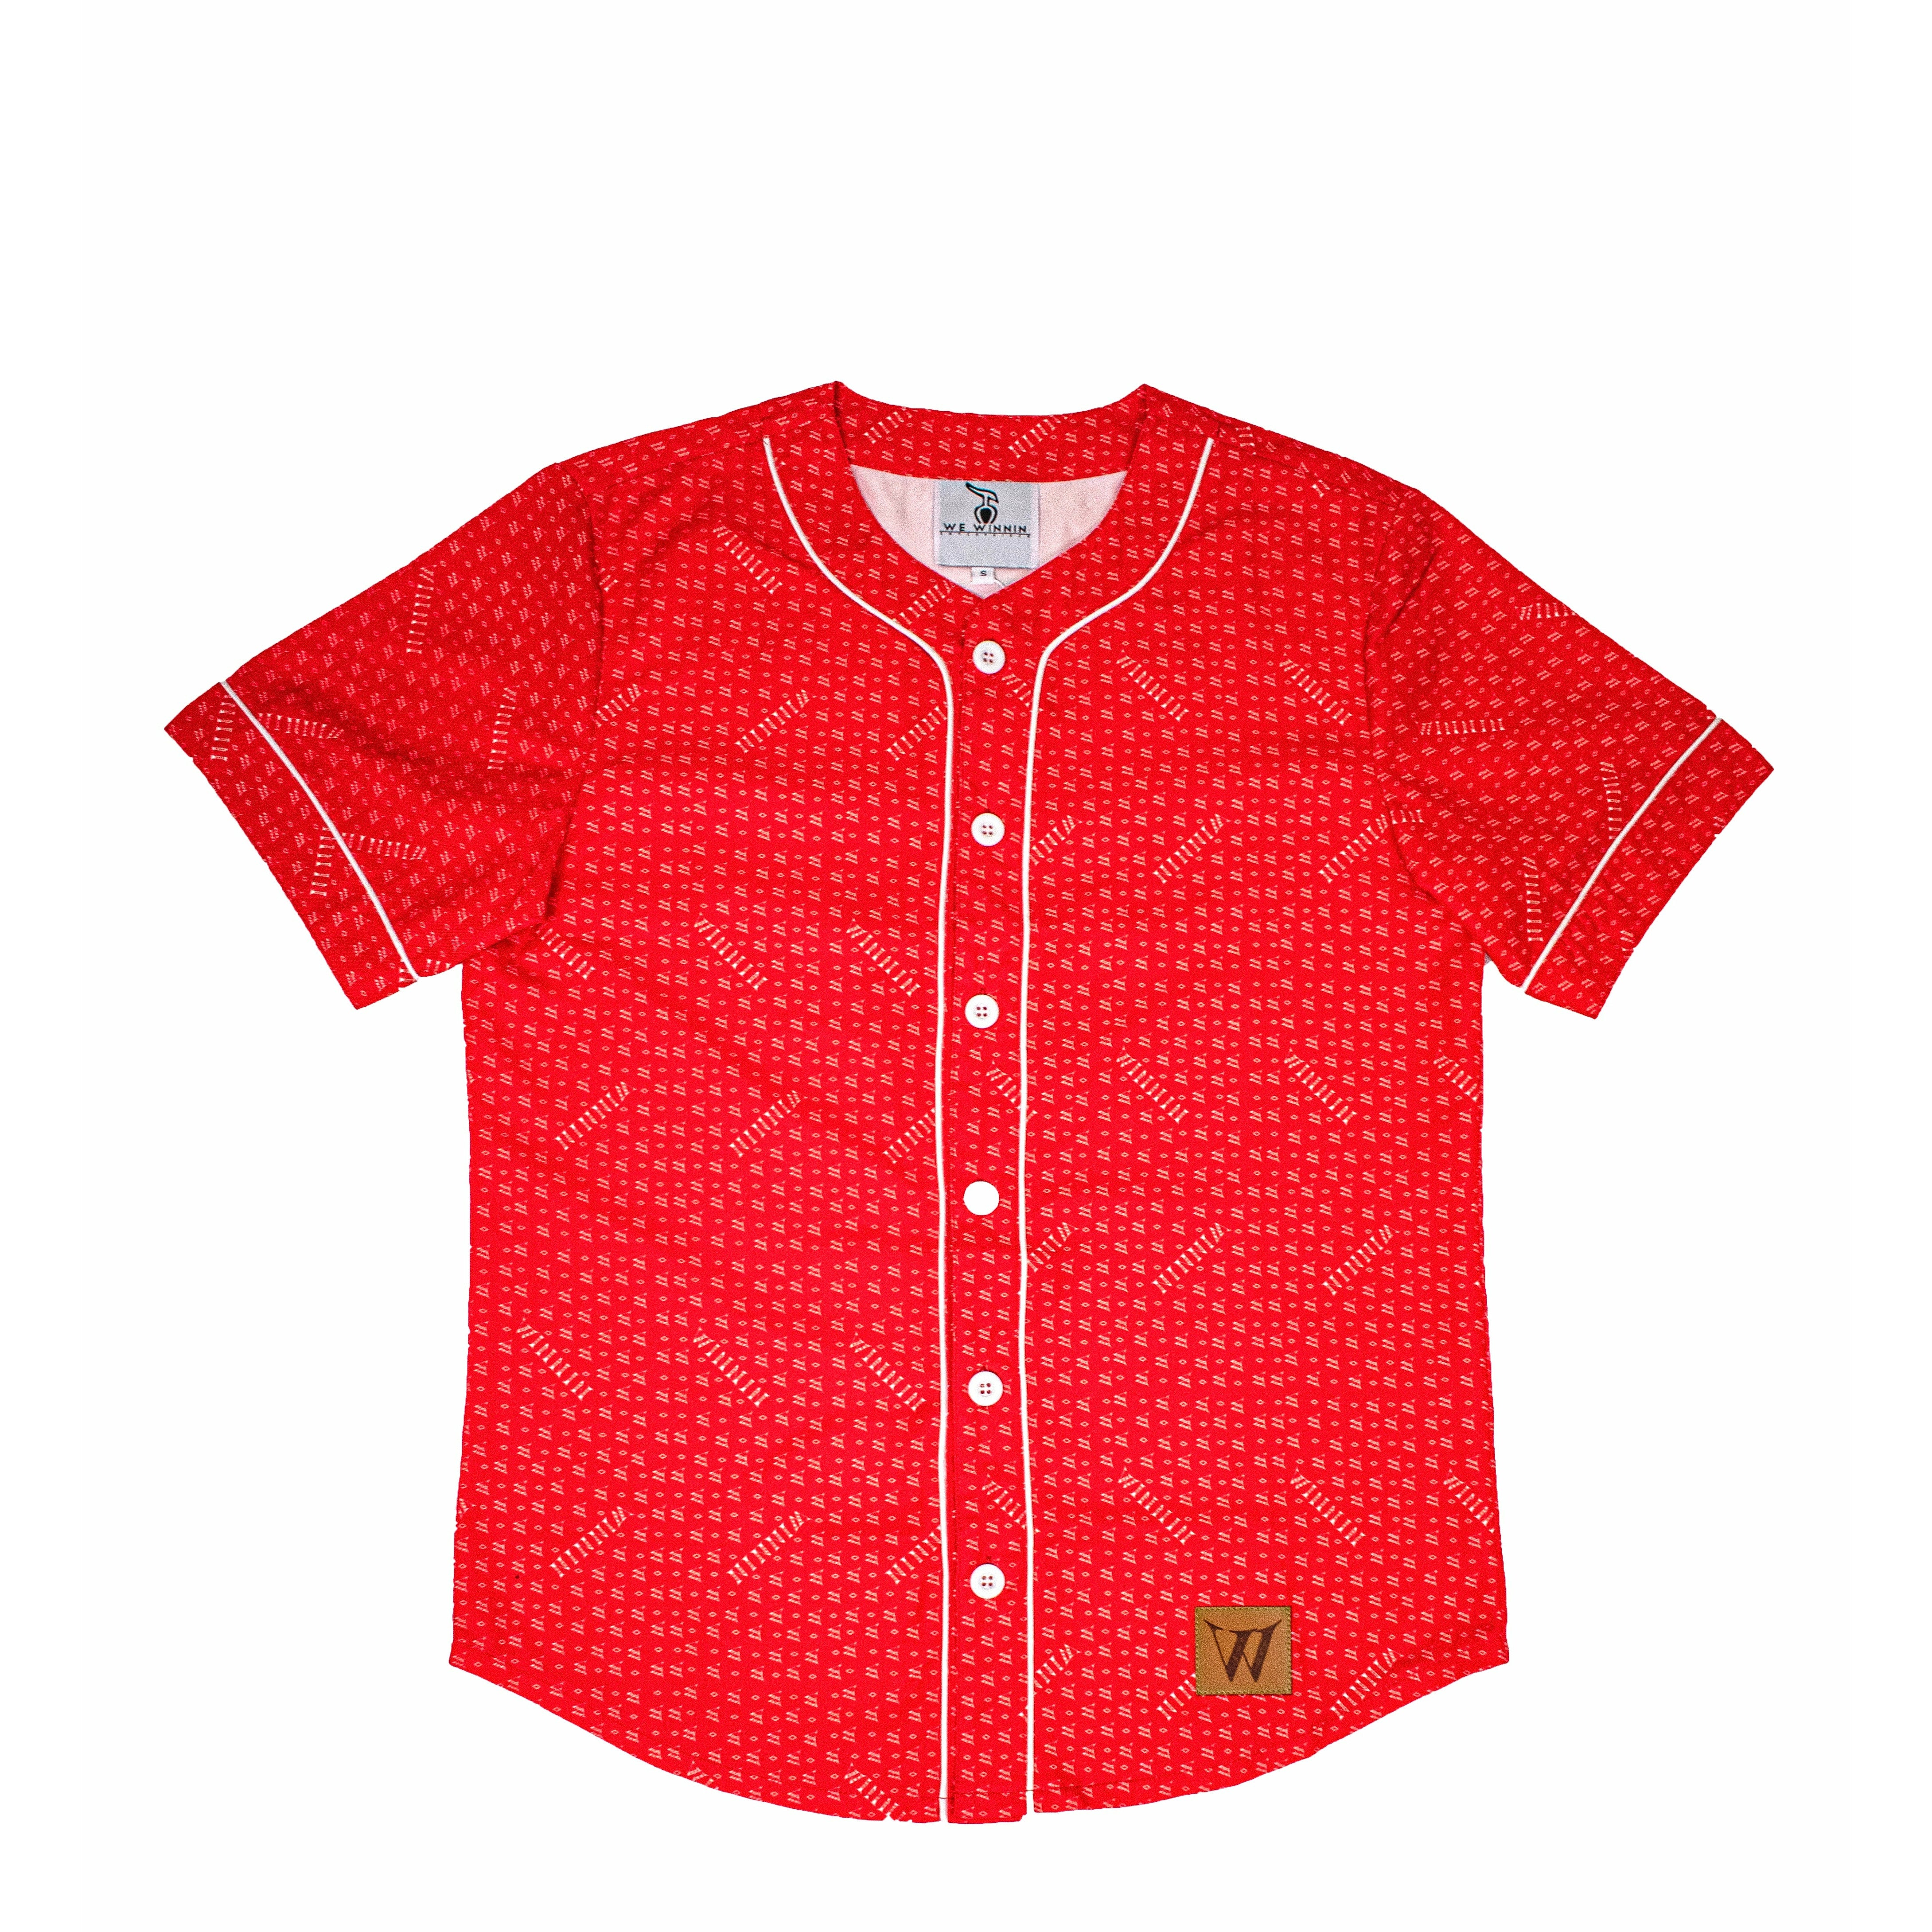 Buy Louis Vuitton Grey Baseball Jersey Shirt Lv Luxury Clothing